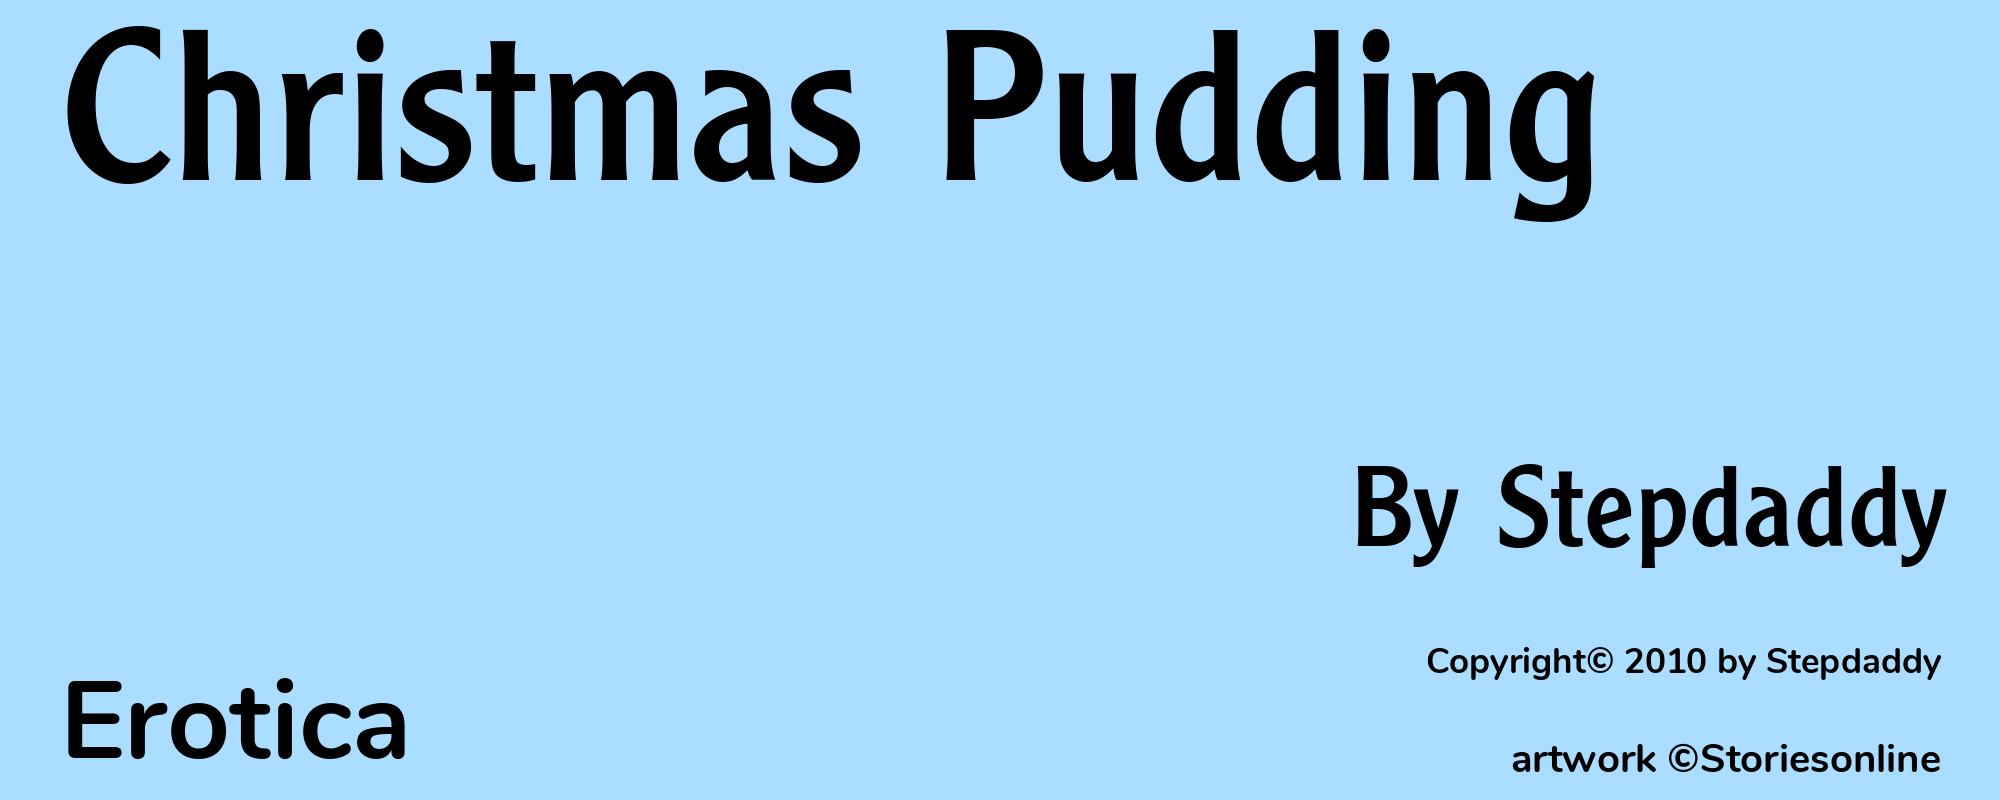 Christmas Pudding - Cover